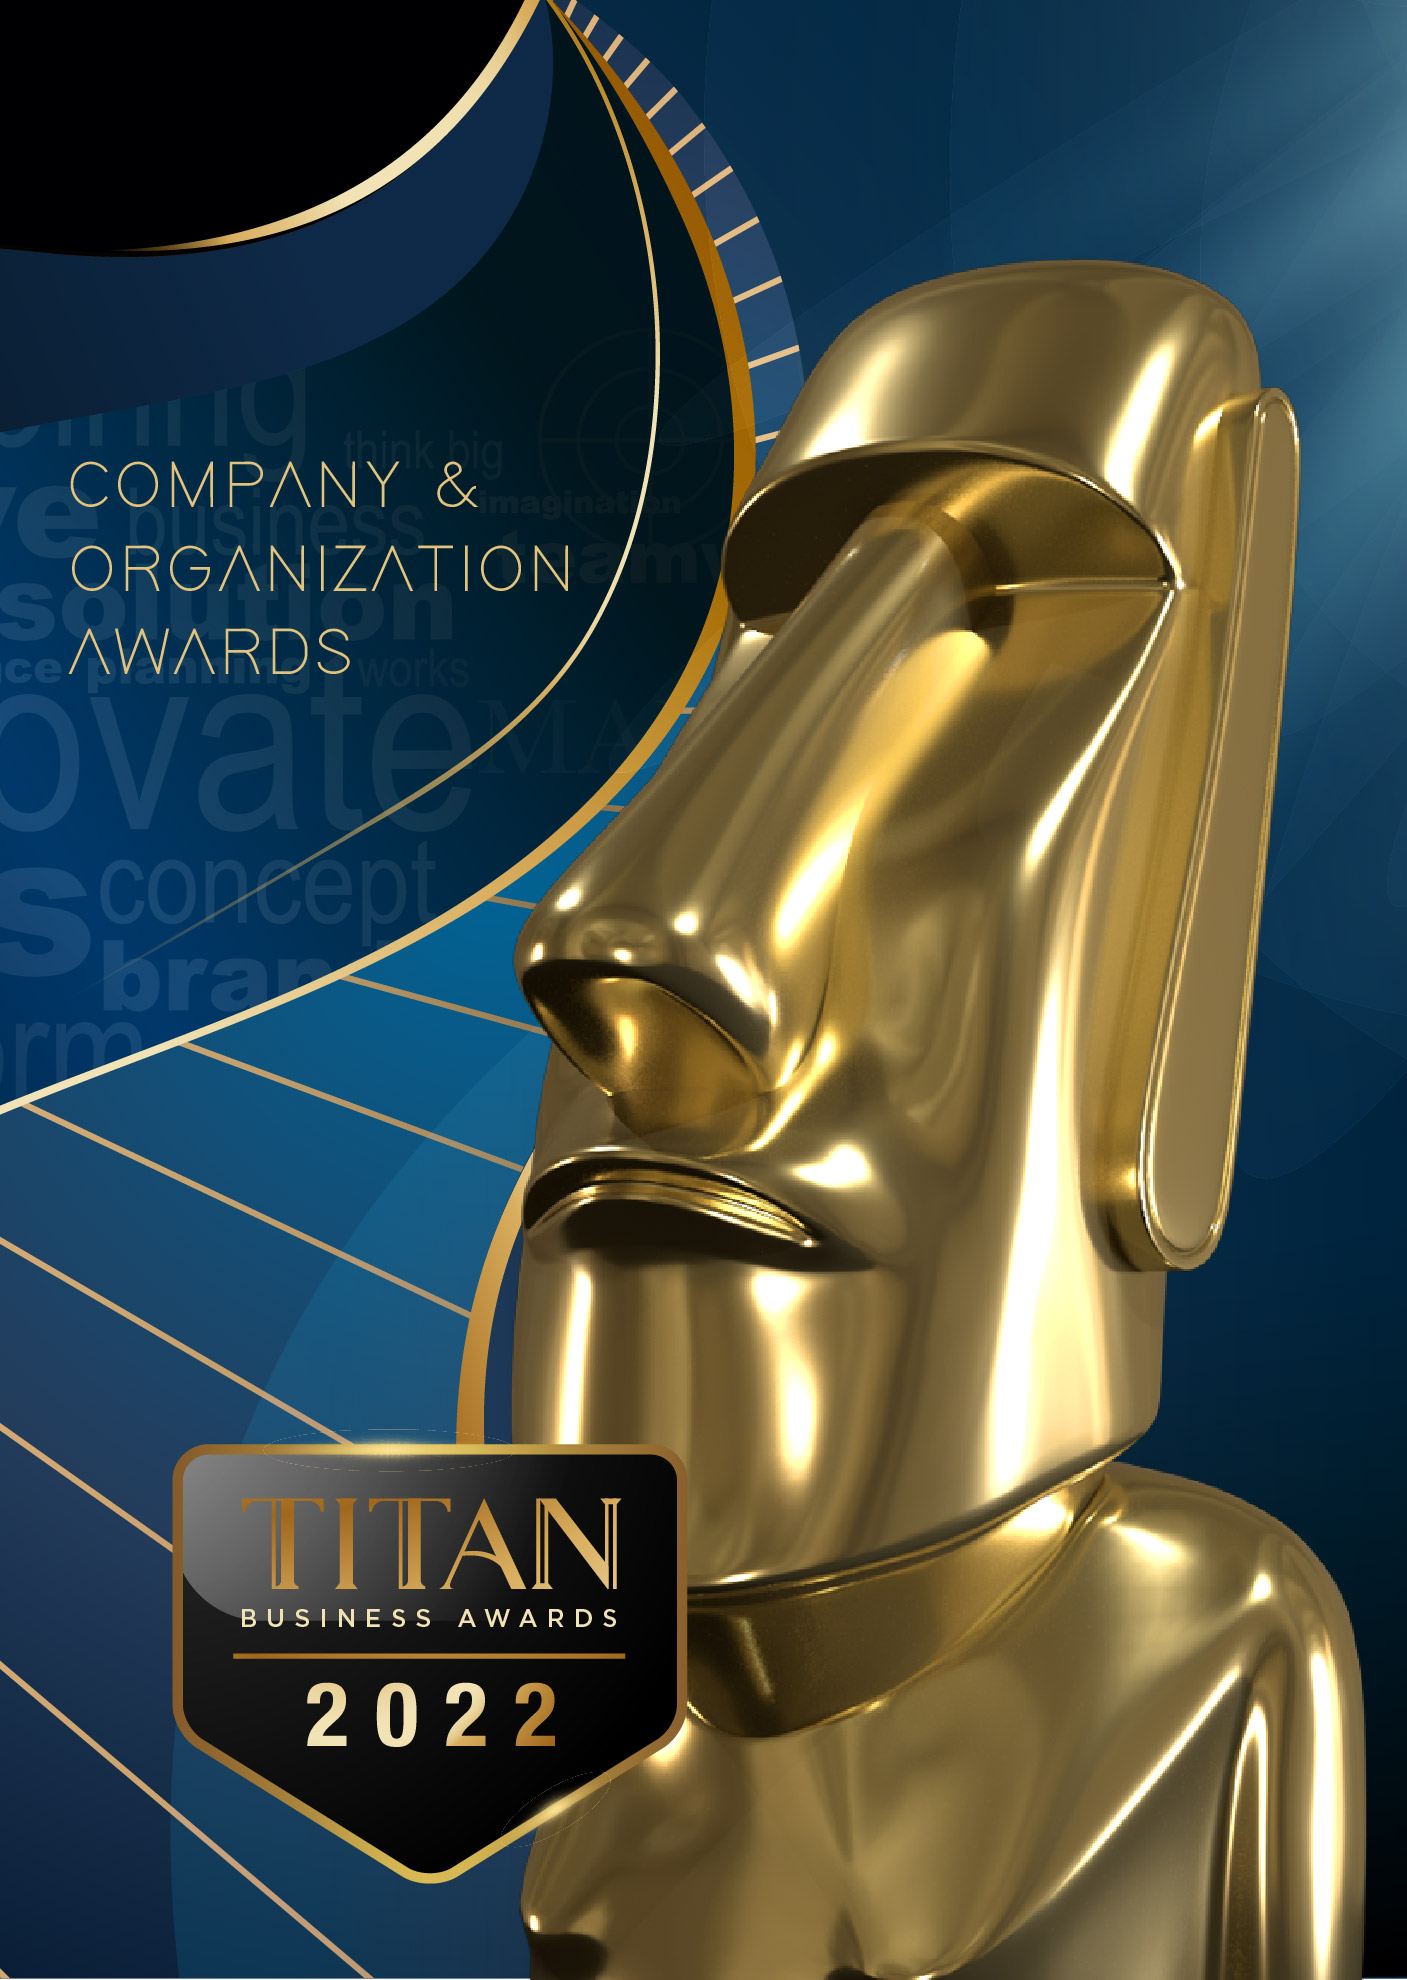 TITAN Company & Organization Awards | International Business Awards